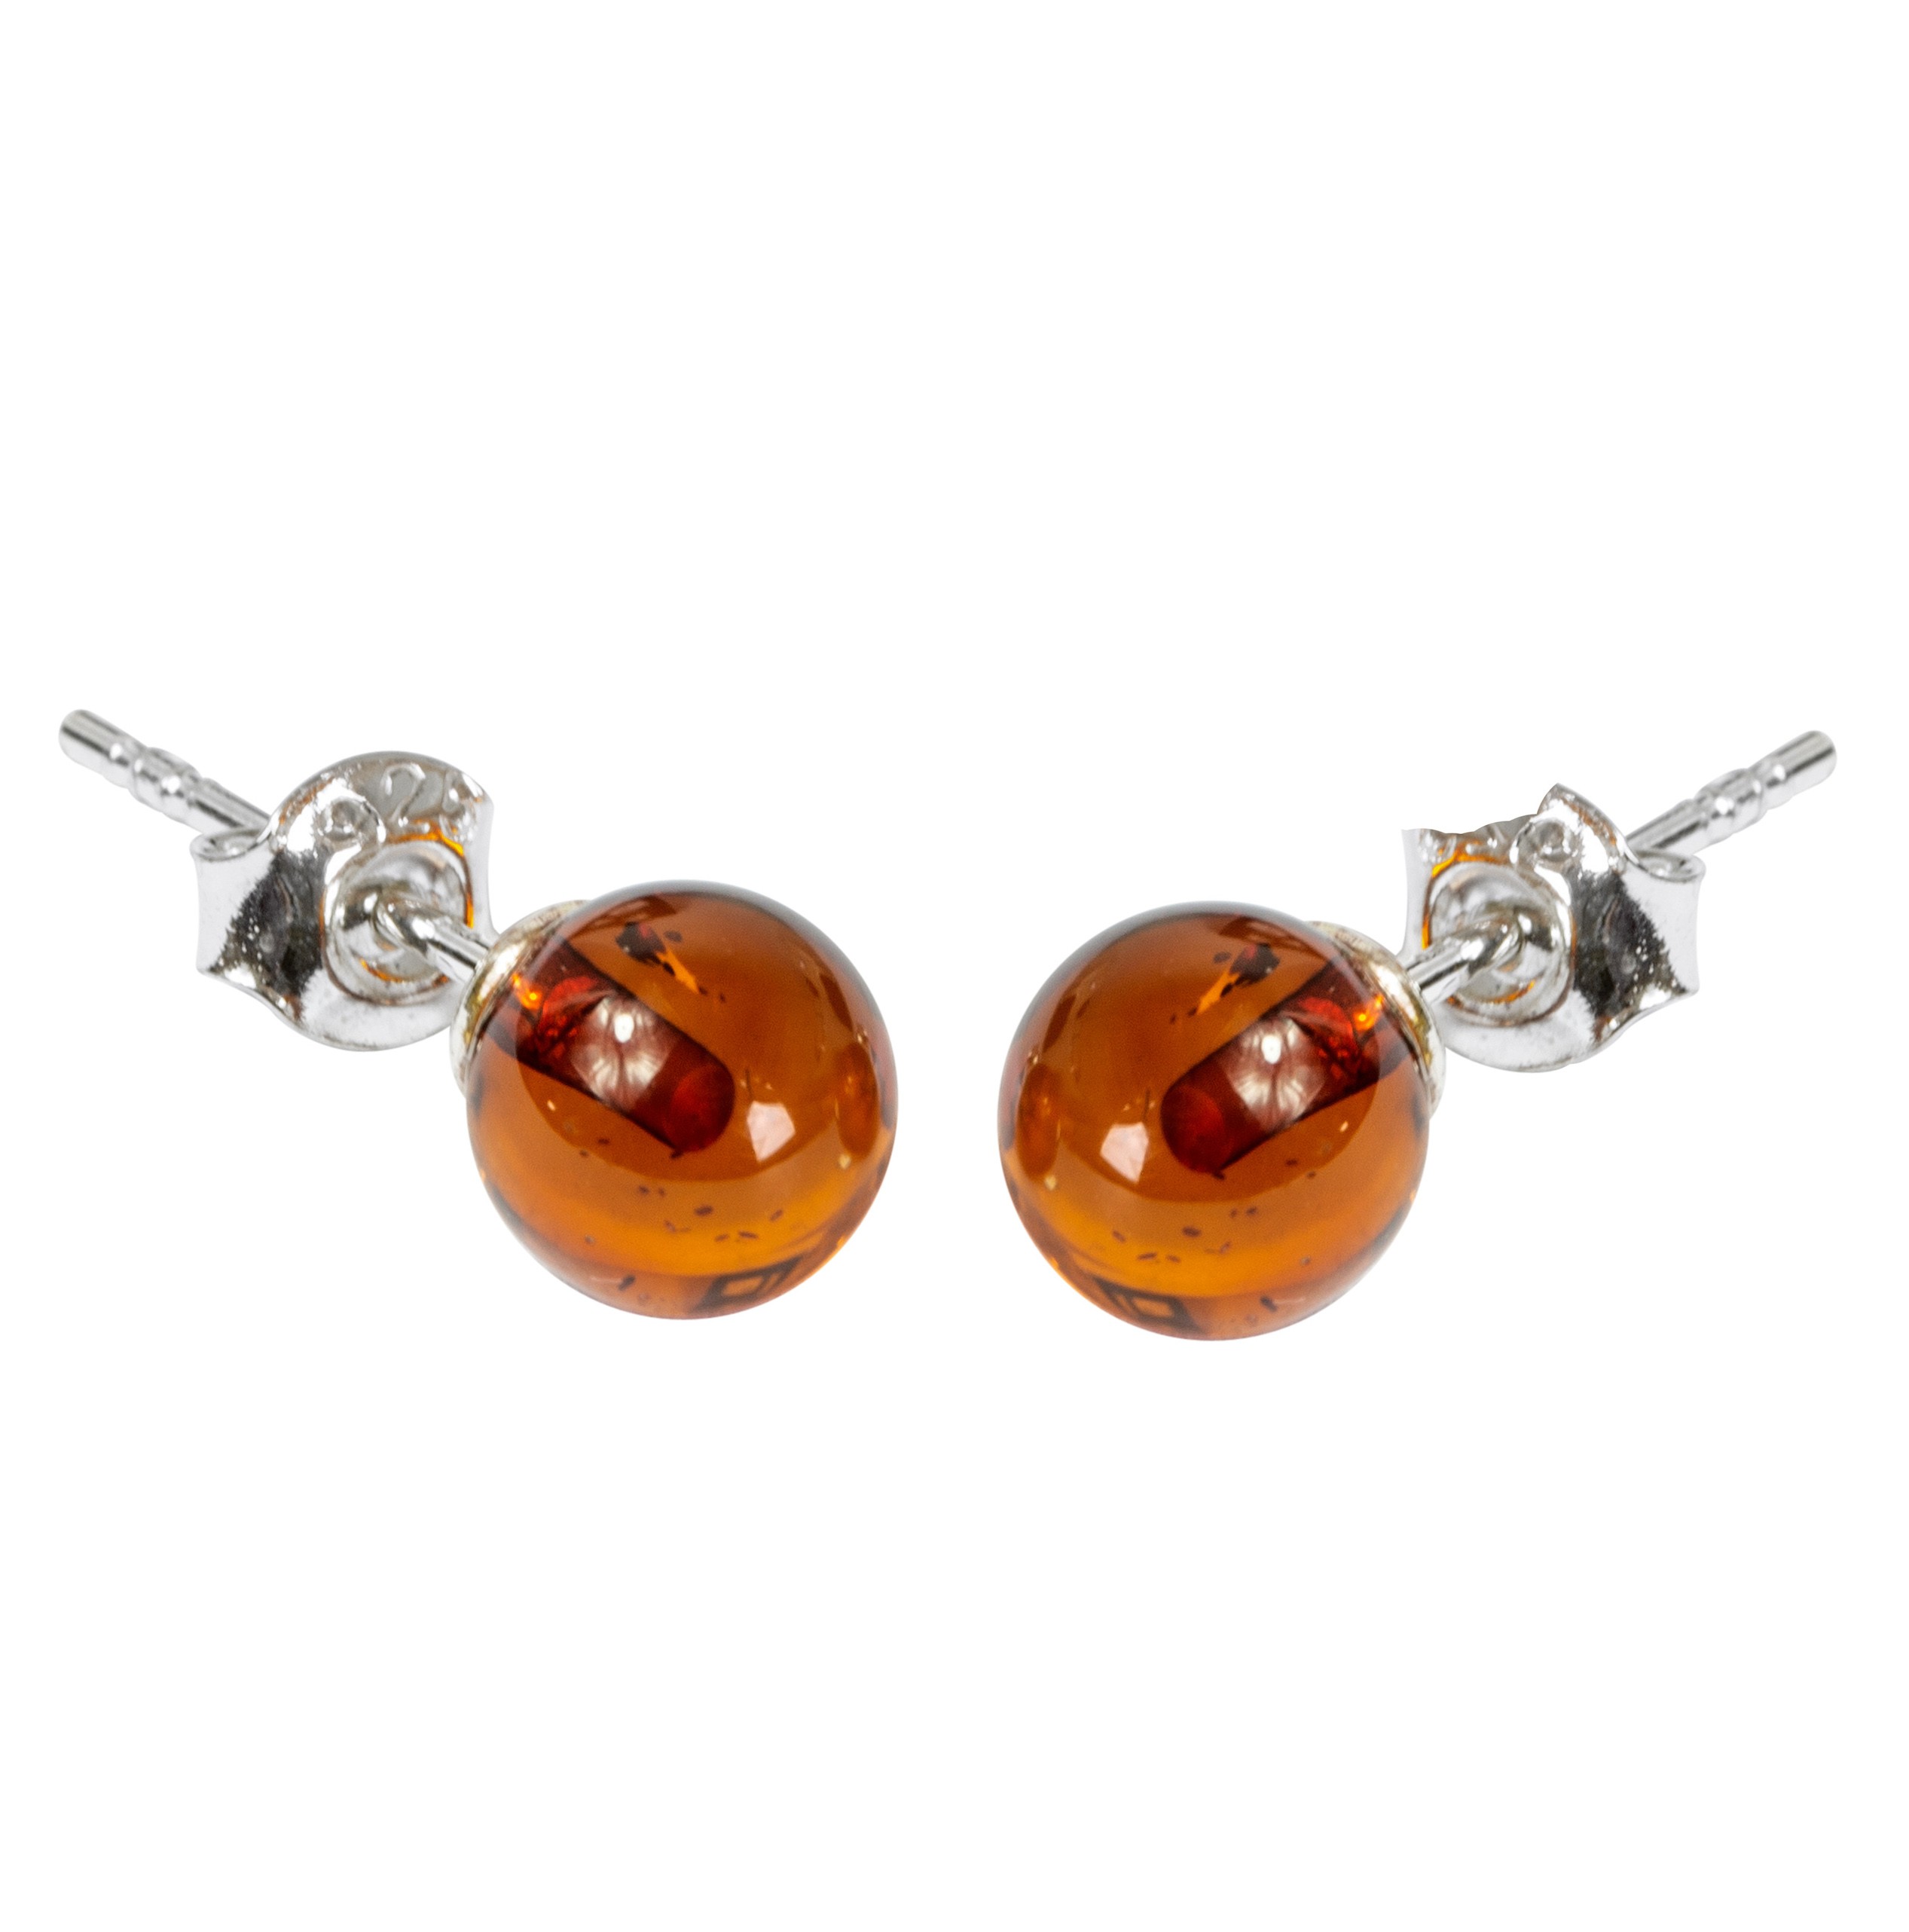 Beautiful Cognac Baltic Amber Earrings Balls on Silver 925